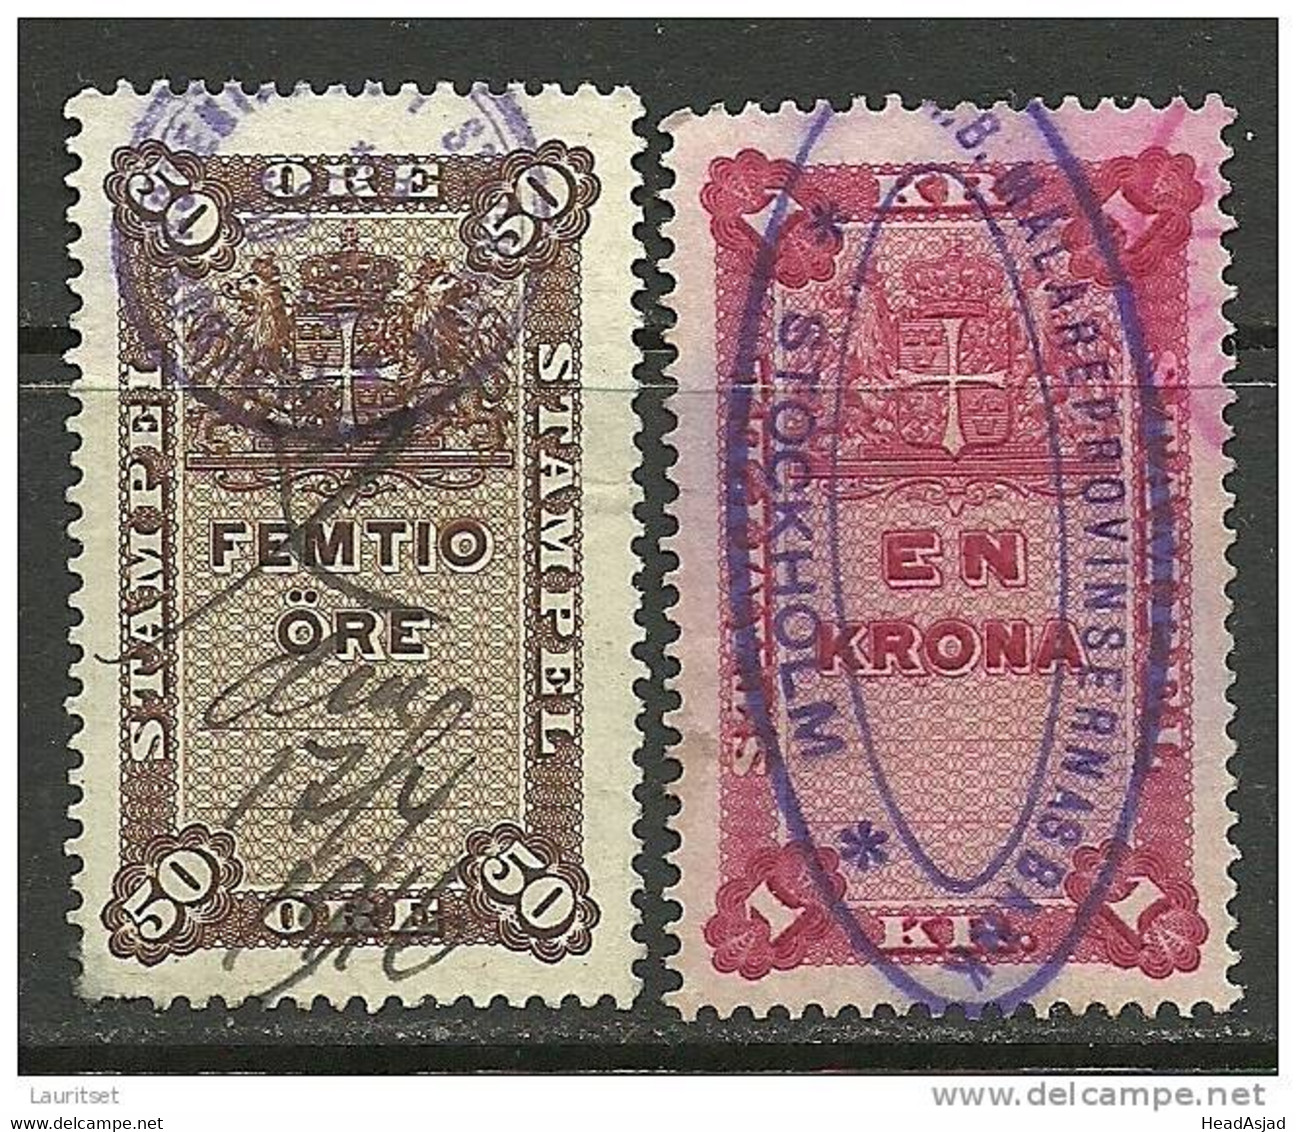 SCHWEDEN Sverige Sweden Stempelmarken Revenue Tax Stamps 50 öre & En Krona 1915/1916 - Steuermarken